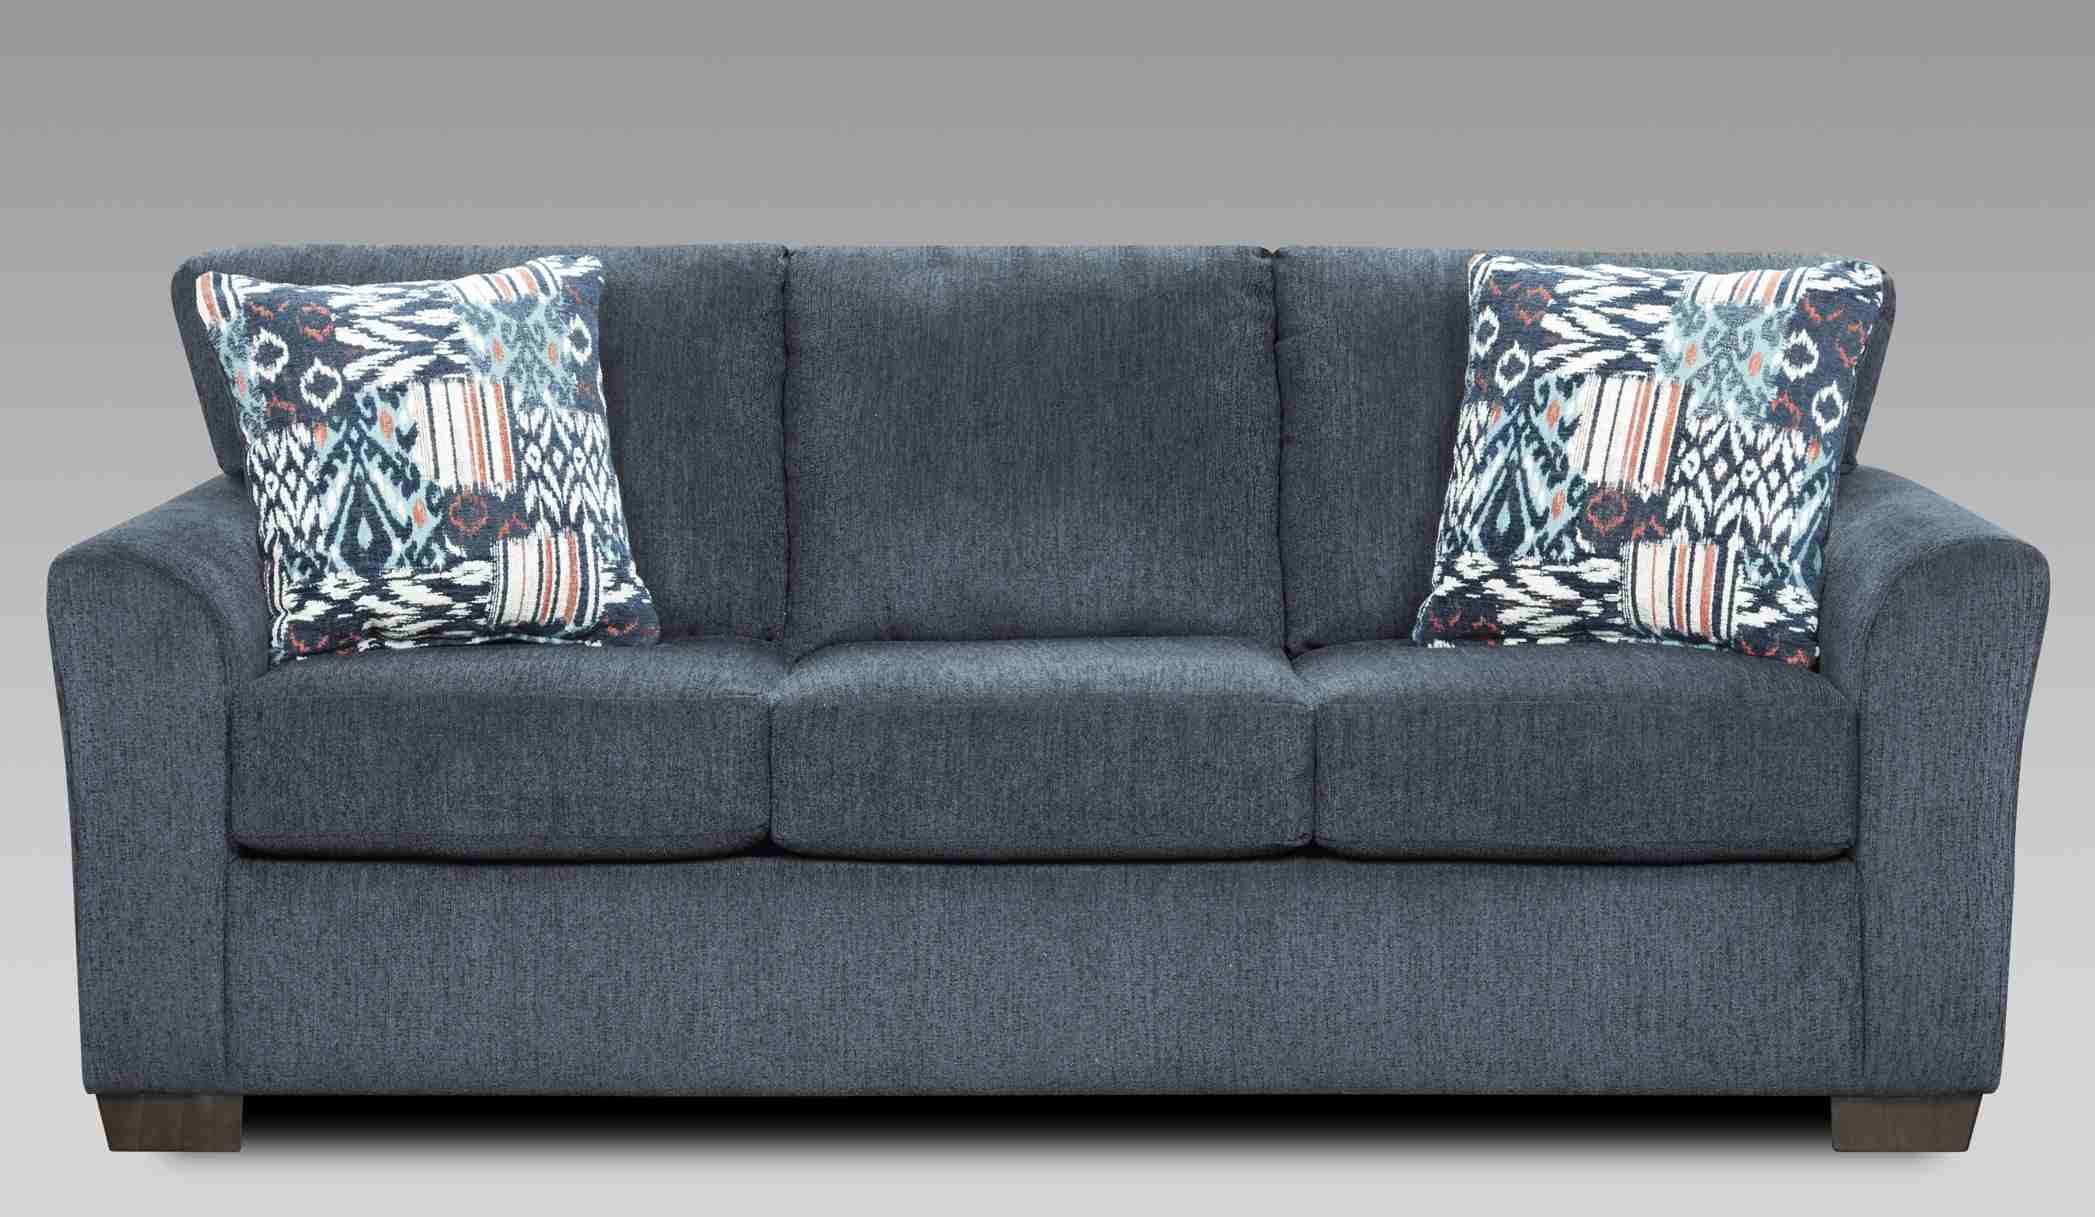 Affordable Furniture Allure Navy Sofa Sleeper